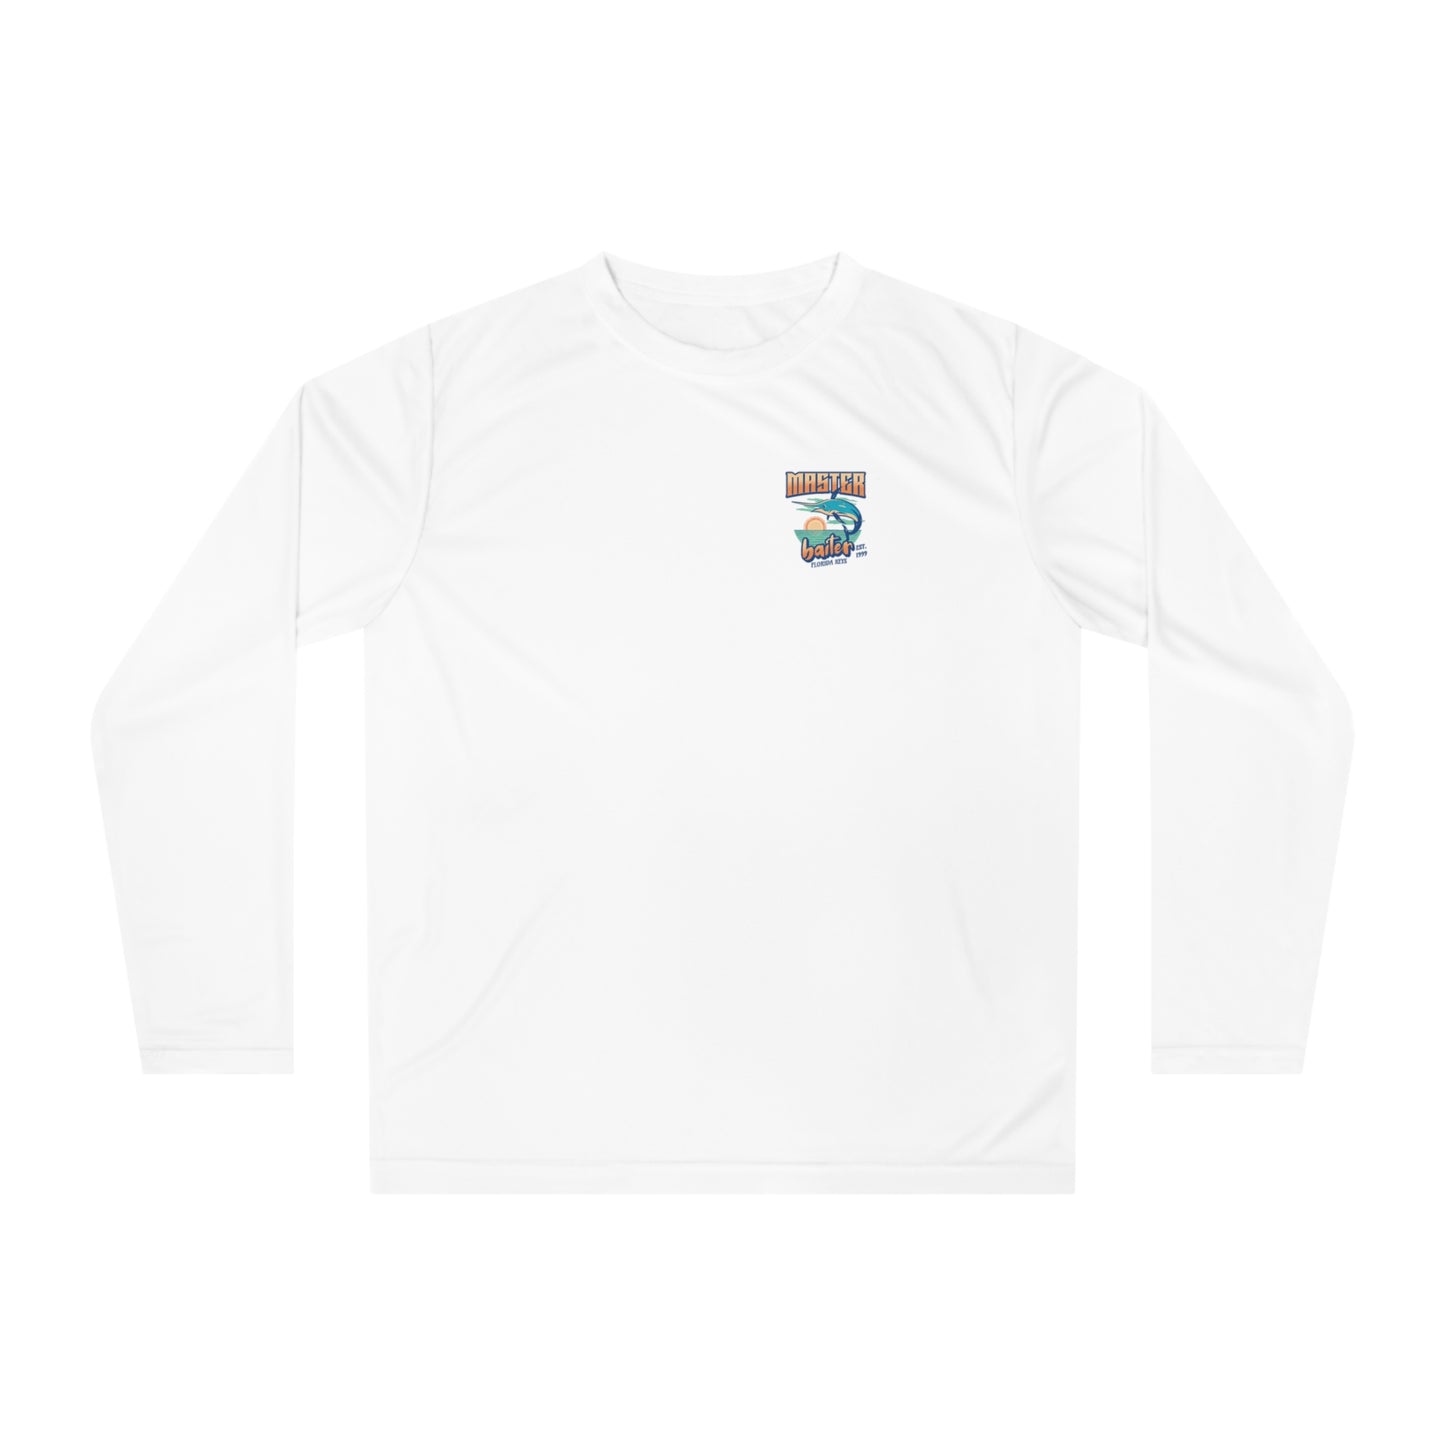 Keys Fishing - OB Bros -  UV long sleeve shirt - long sleeve fishing shirt - UV shirt - florida fishing shirt